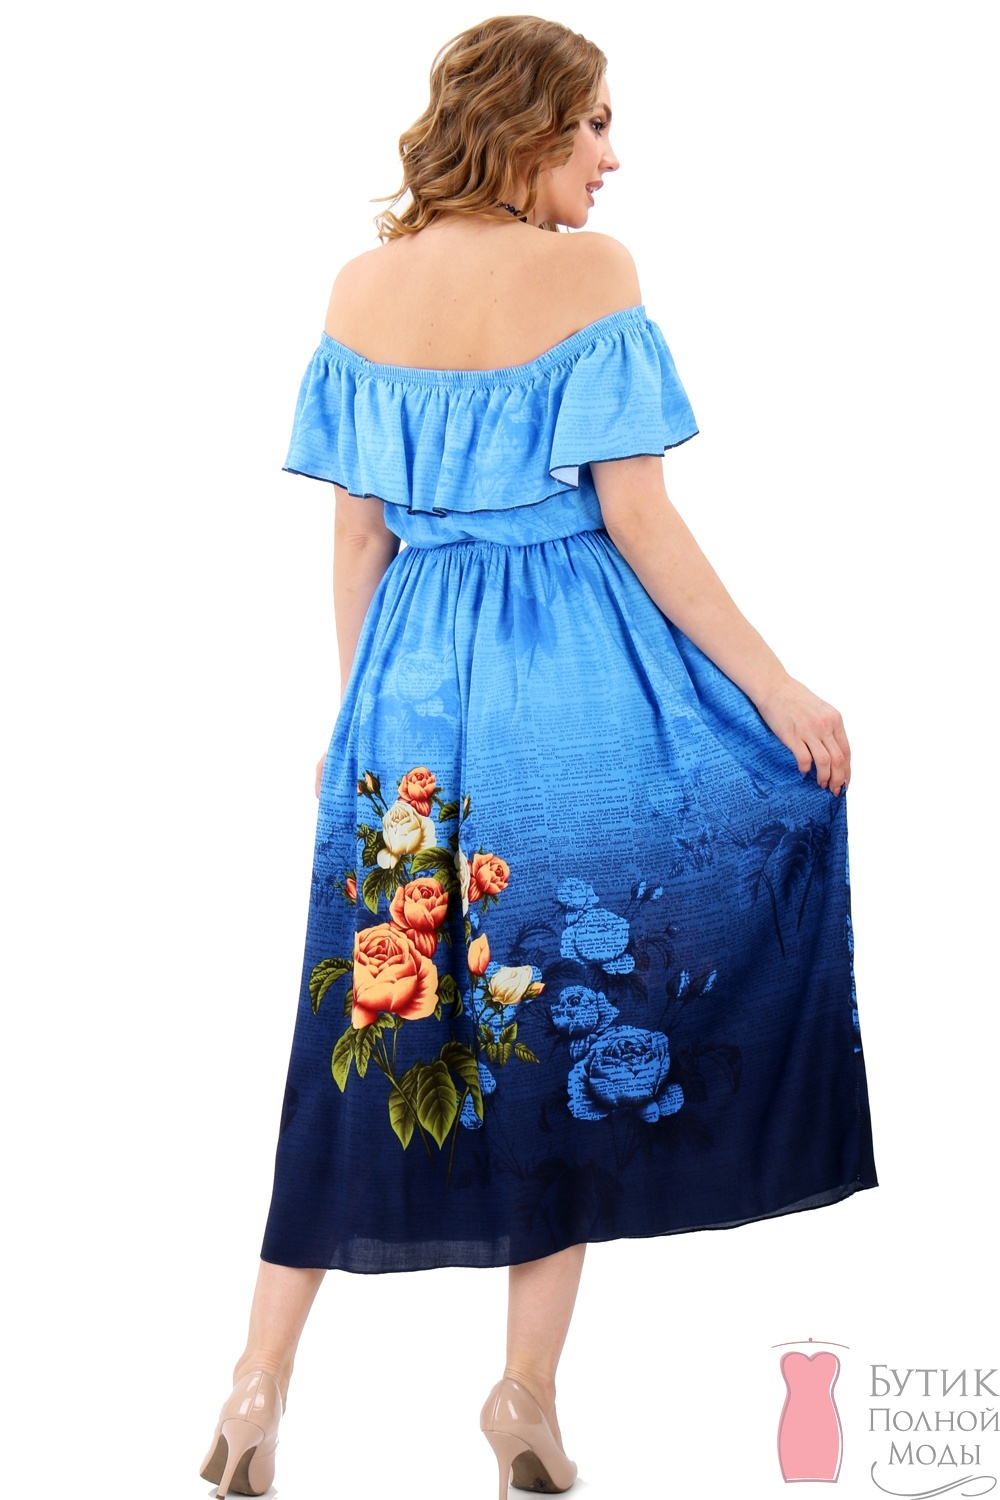 Фото №3: Платье-сарафан A2858045, Цена: 2 350 руб